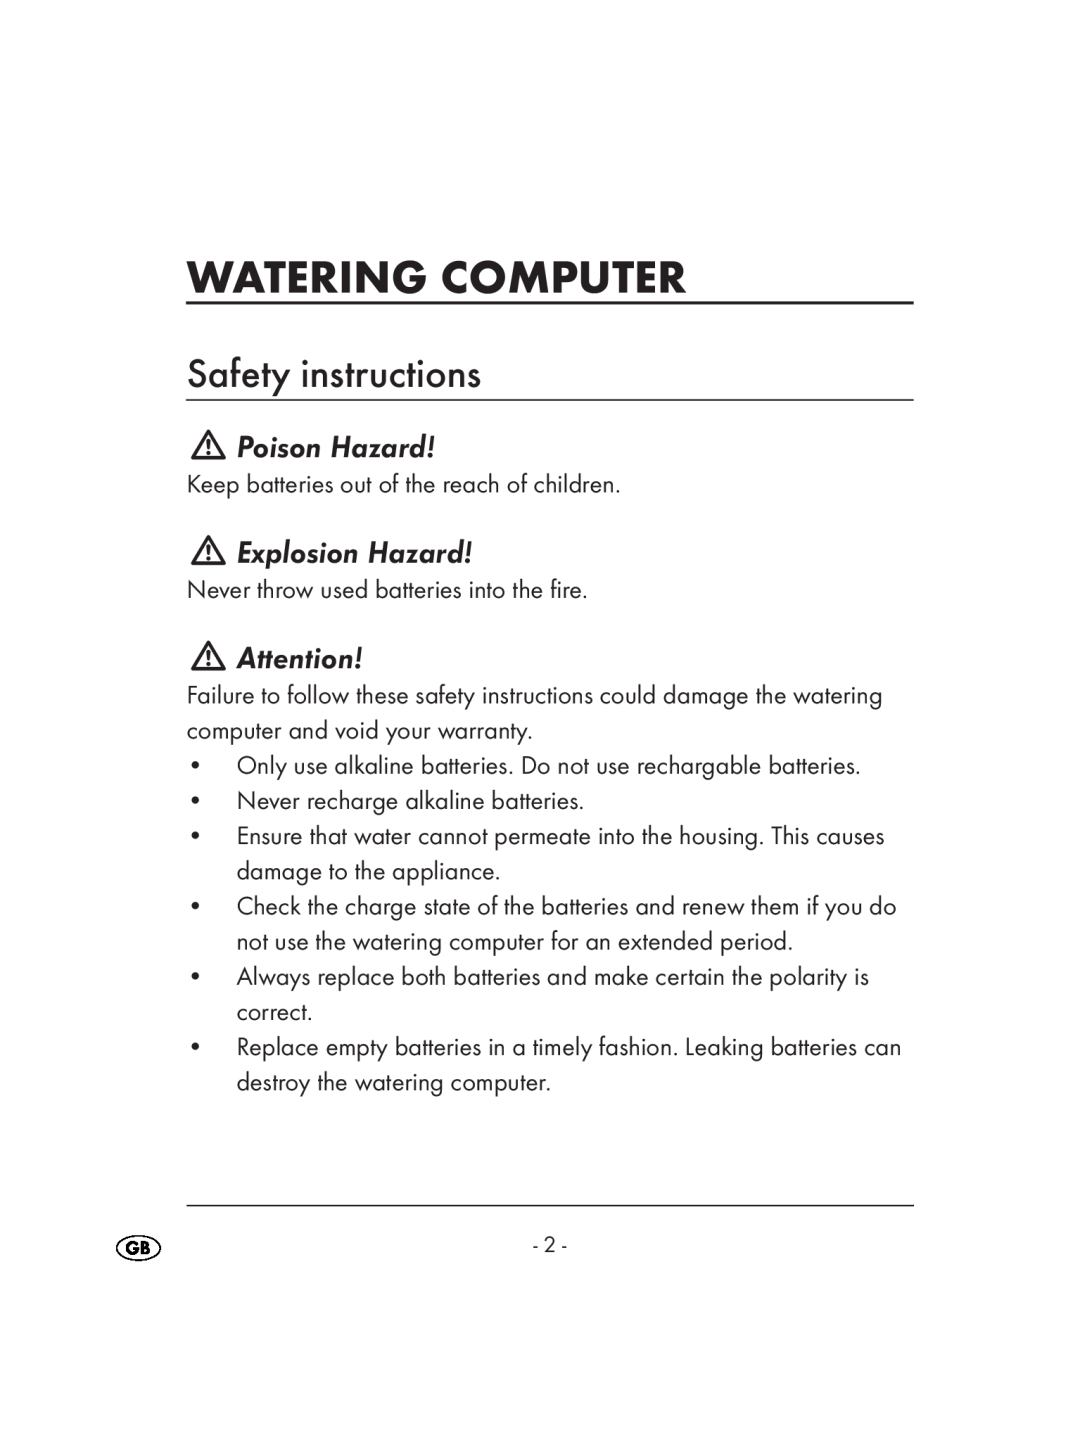 Kompernass KH 4083 manual Watering Computer, Safety instructions, Poison Hazard, Explosion Hazard 